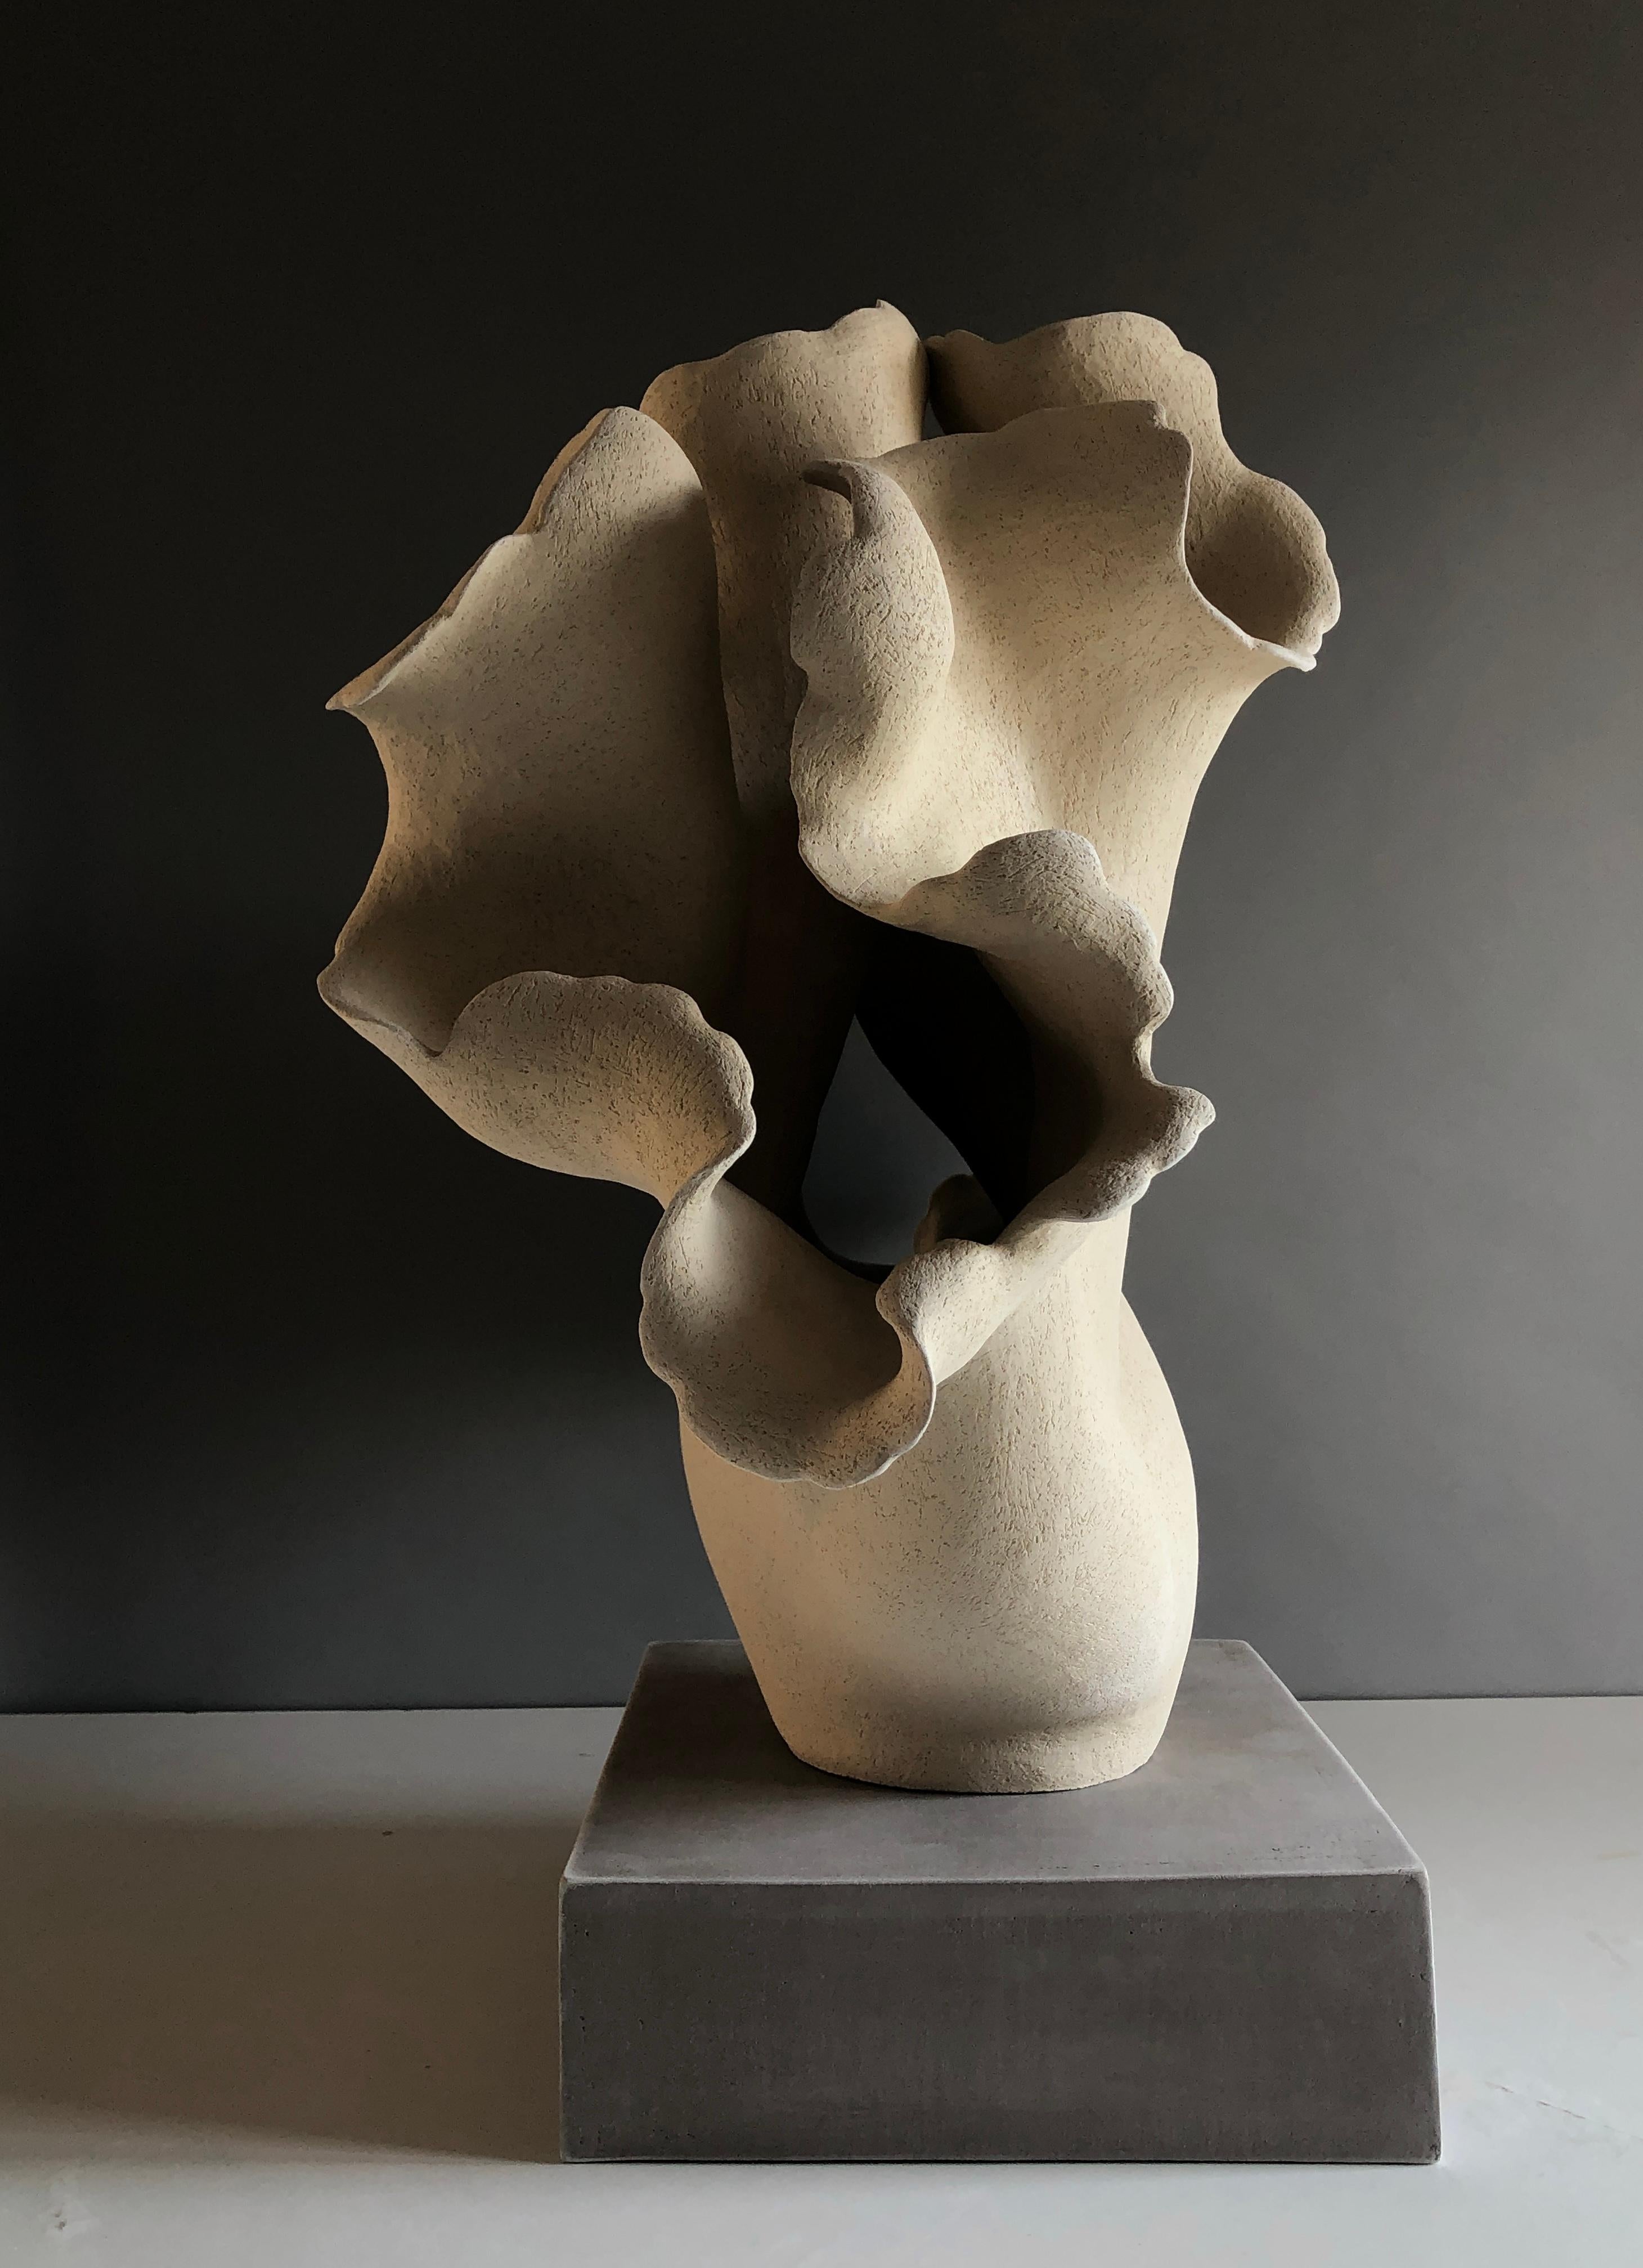 bespoke ceramic sculptures